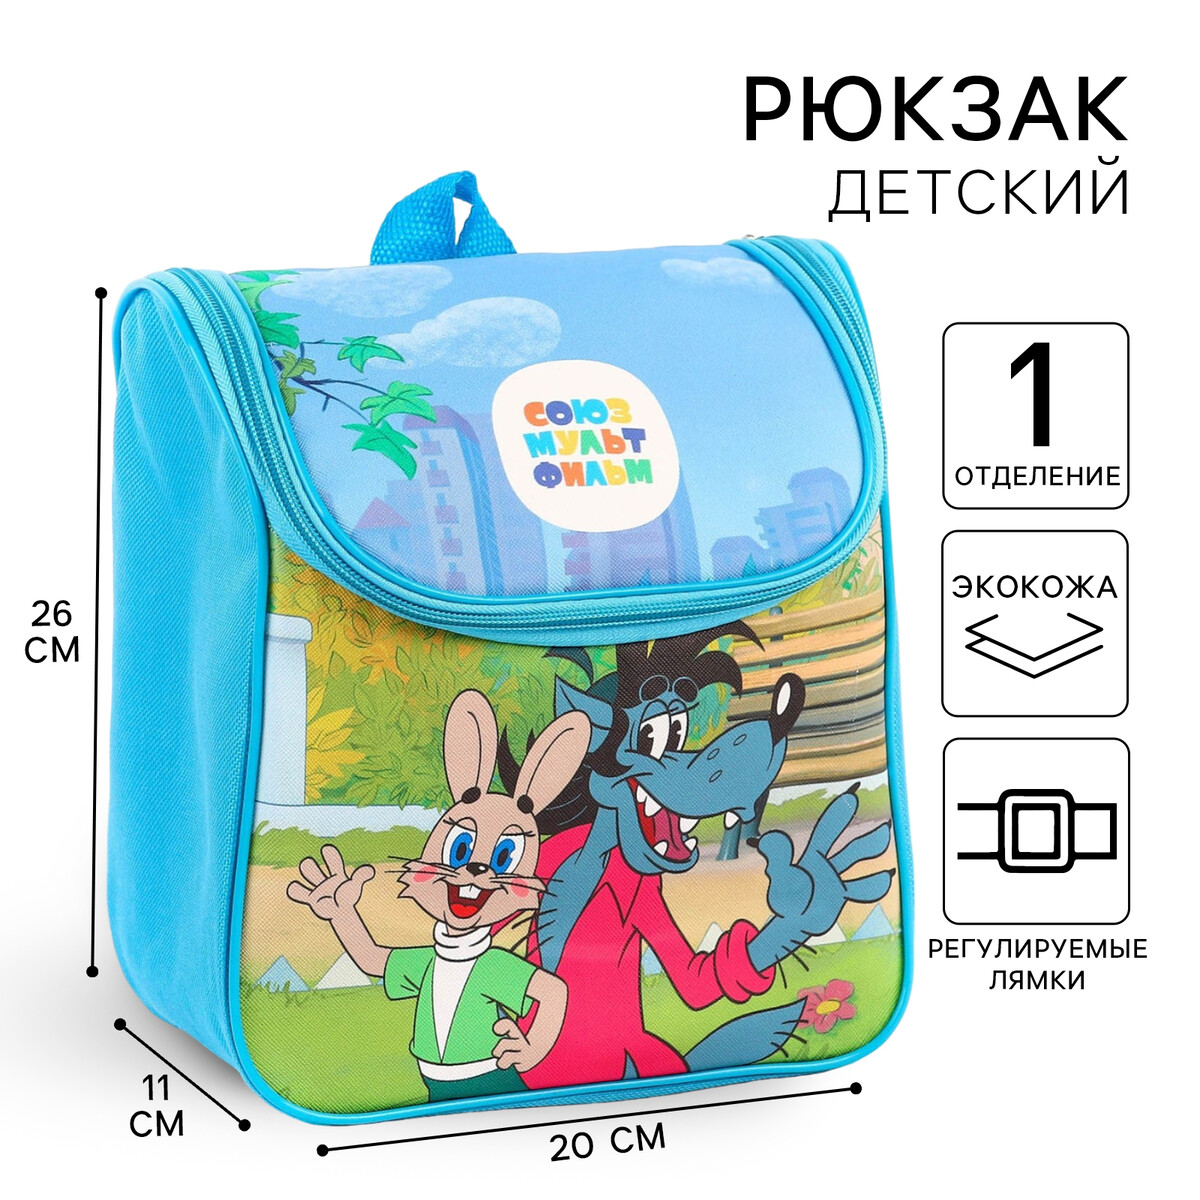 Рюкзак детский на молнии сверху, текстиль, 20 см х 11 см х 26 см